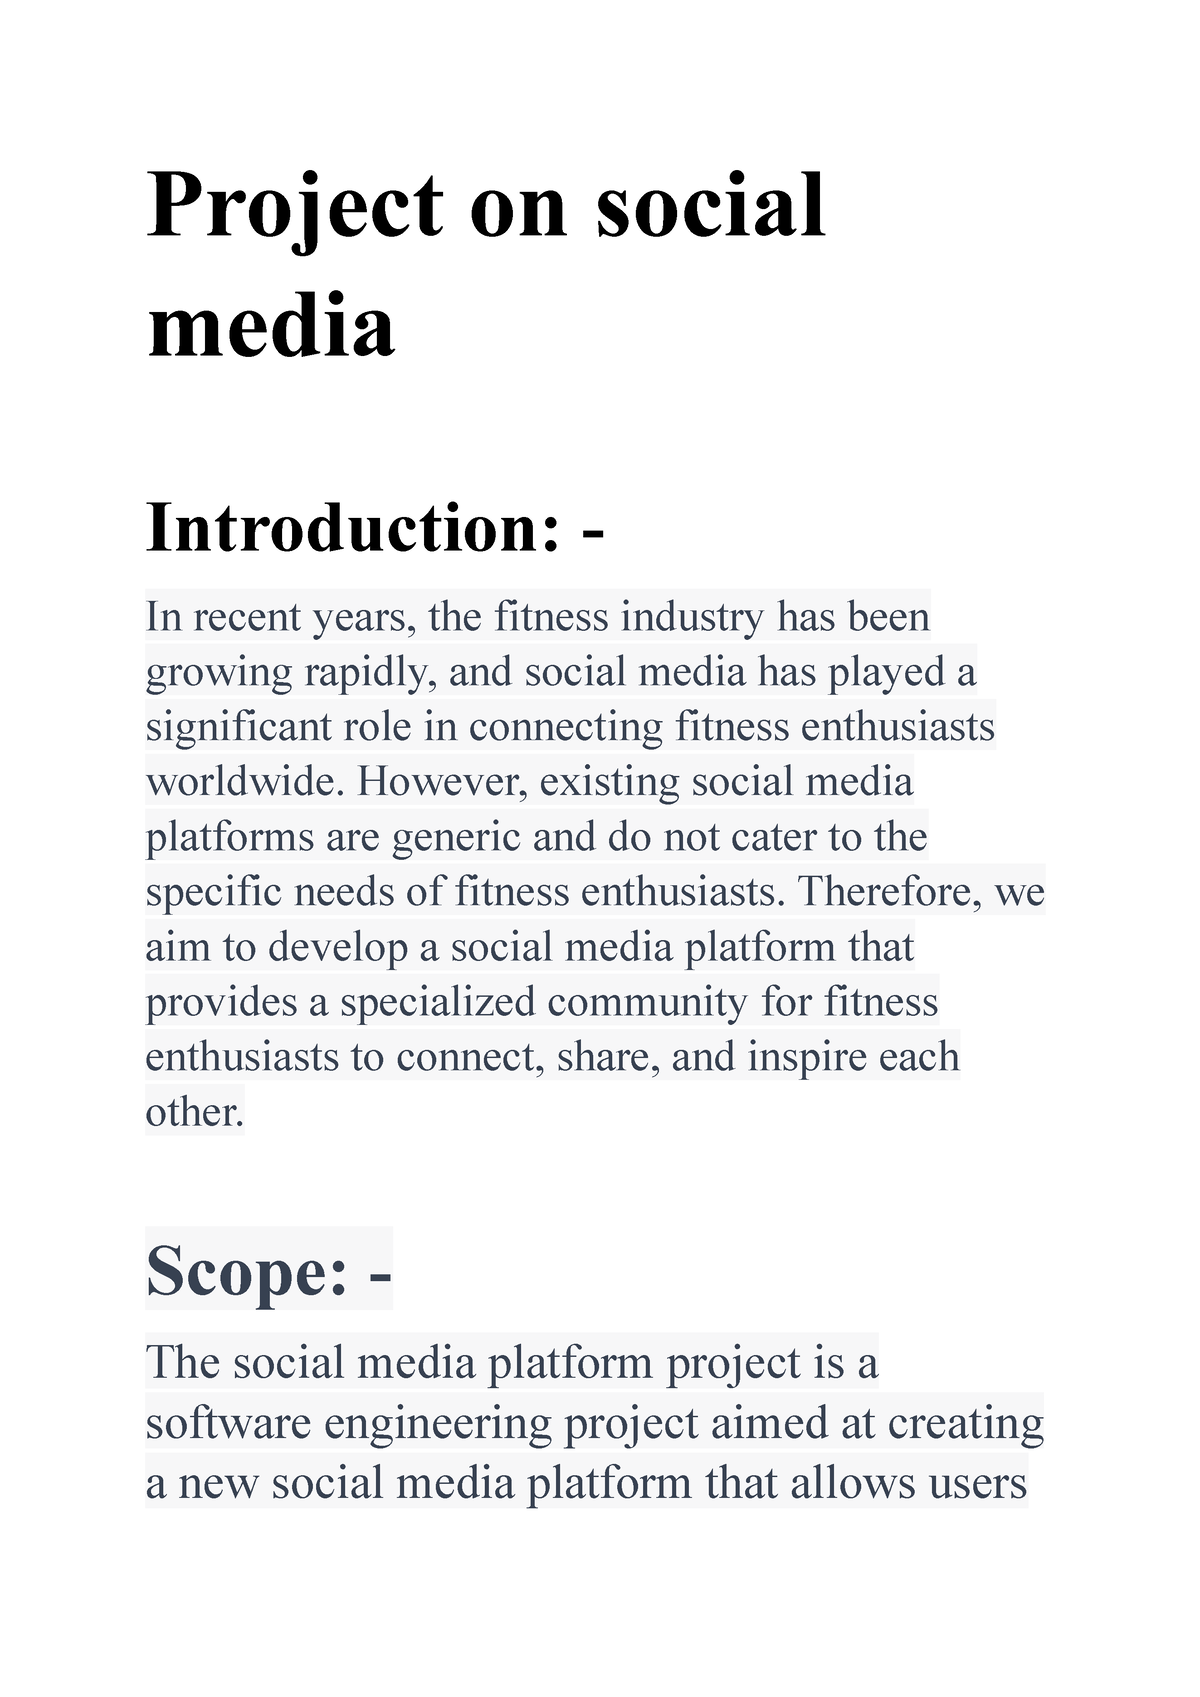 good introduction for social media essay